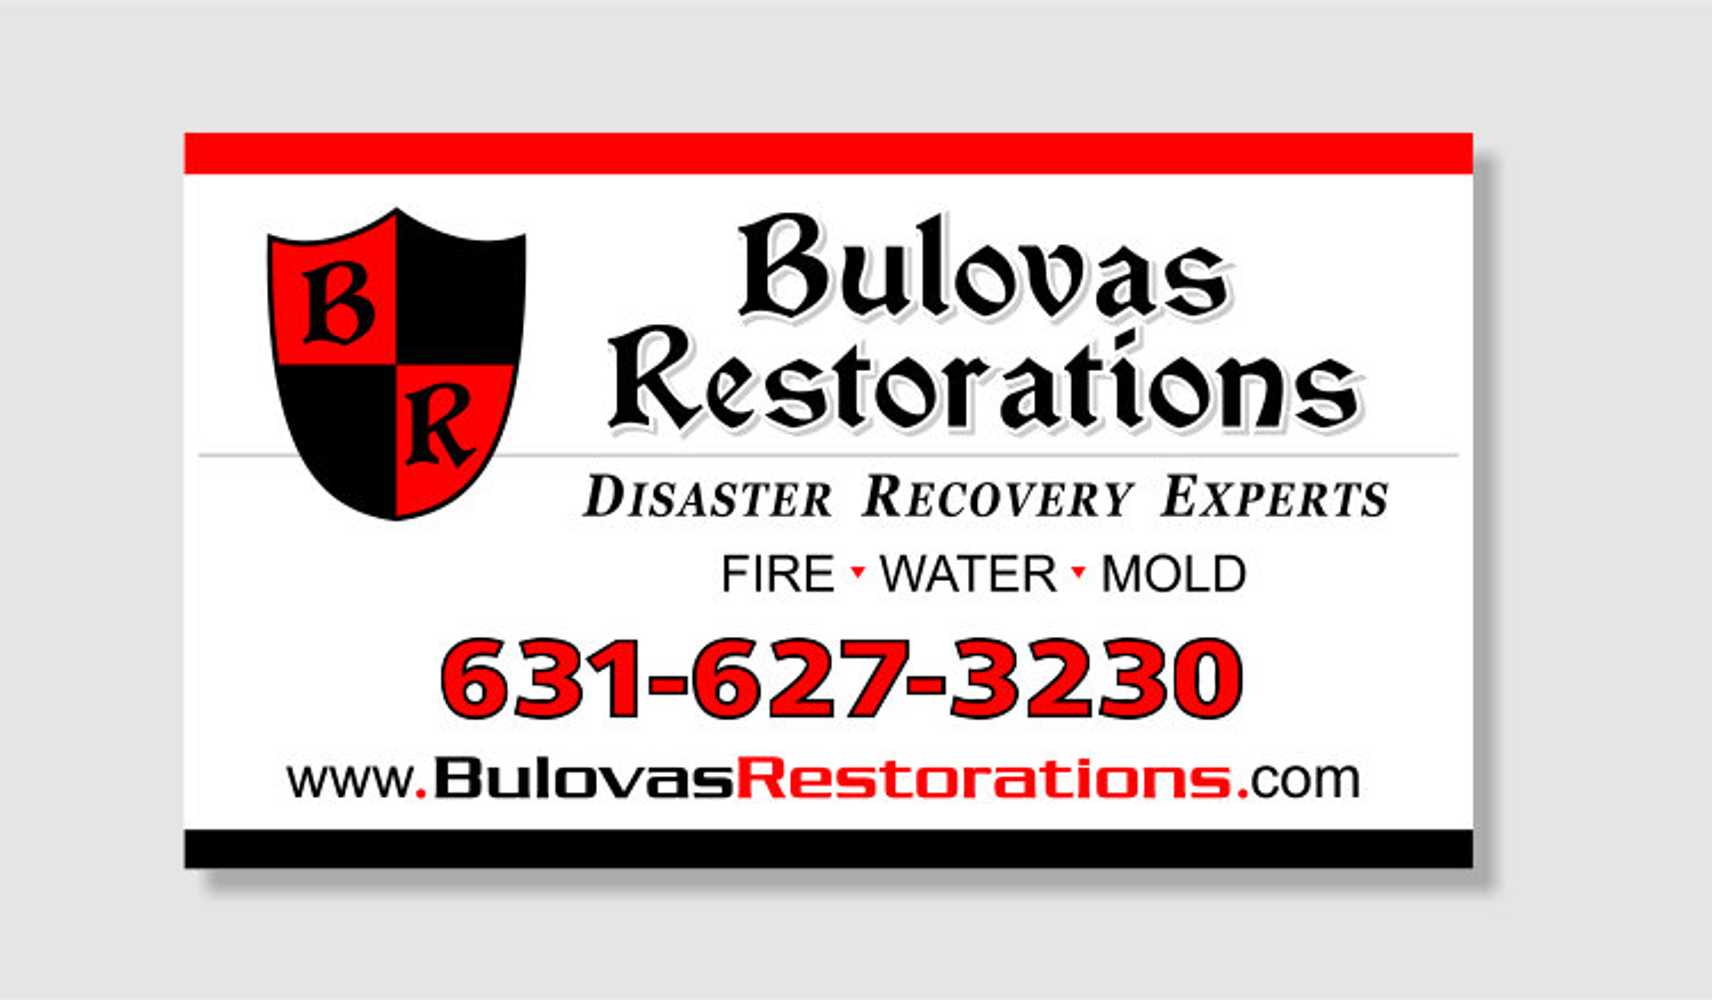 Project photos from Bulovas Restorations Inc